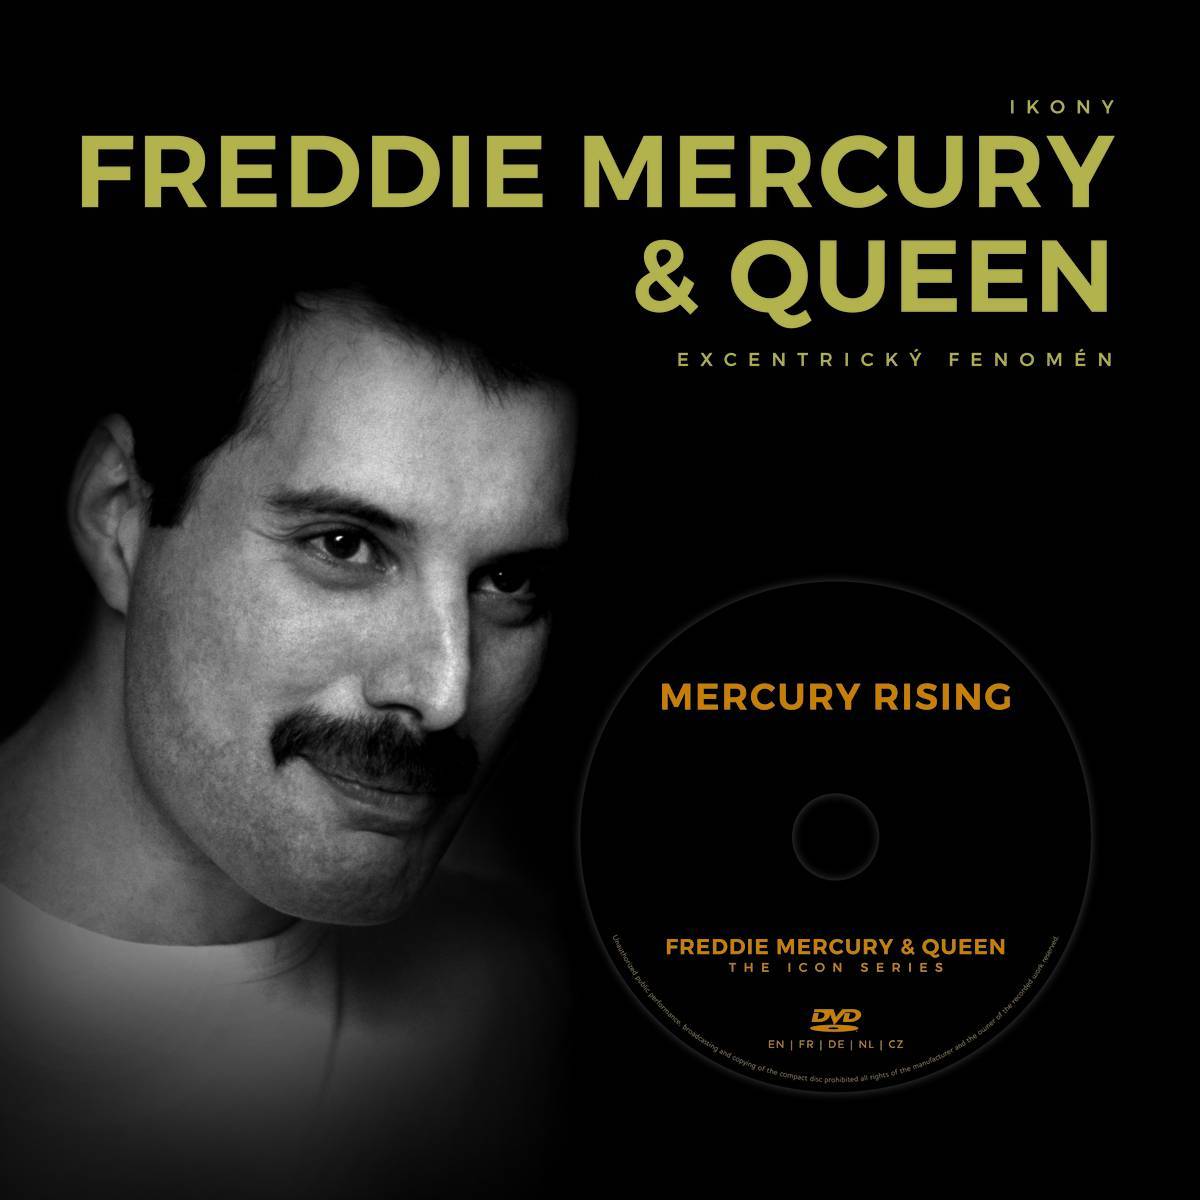 RECENZE: Kniha Freddie Mercury & Queen: Excentrický fenomén poukazuje na  zpěvákovu rozpolcenou osobnost | iREPORT – music&style magazine